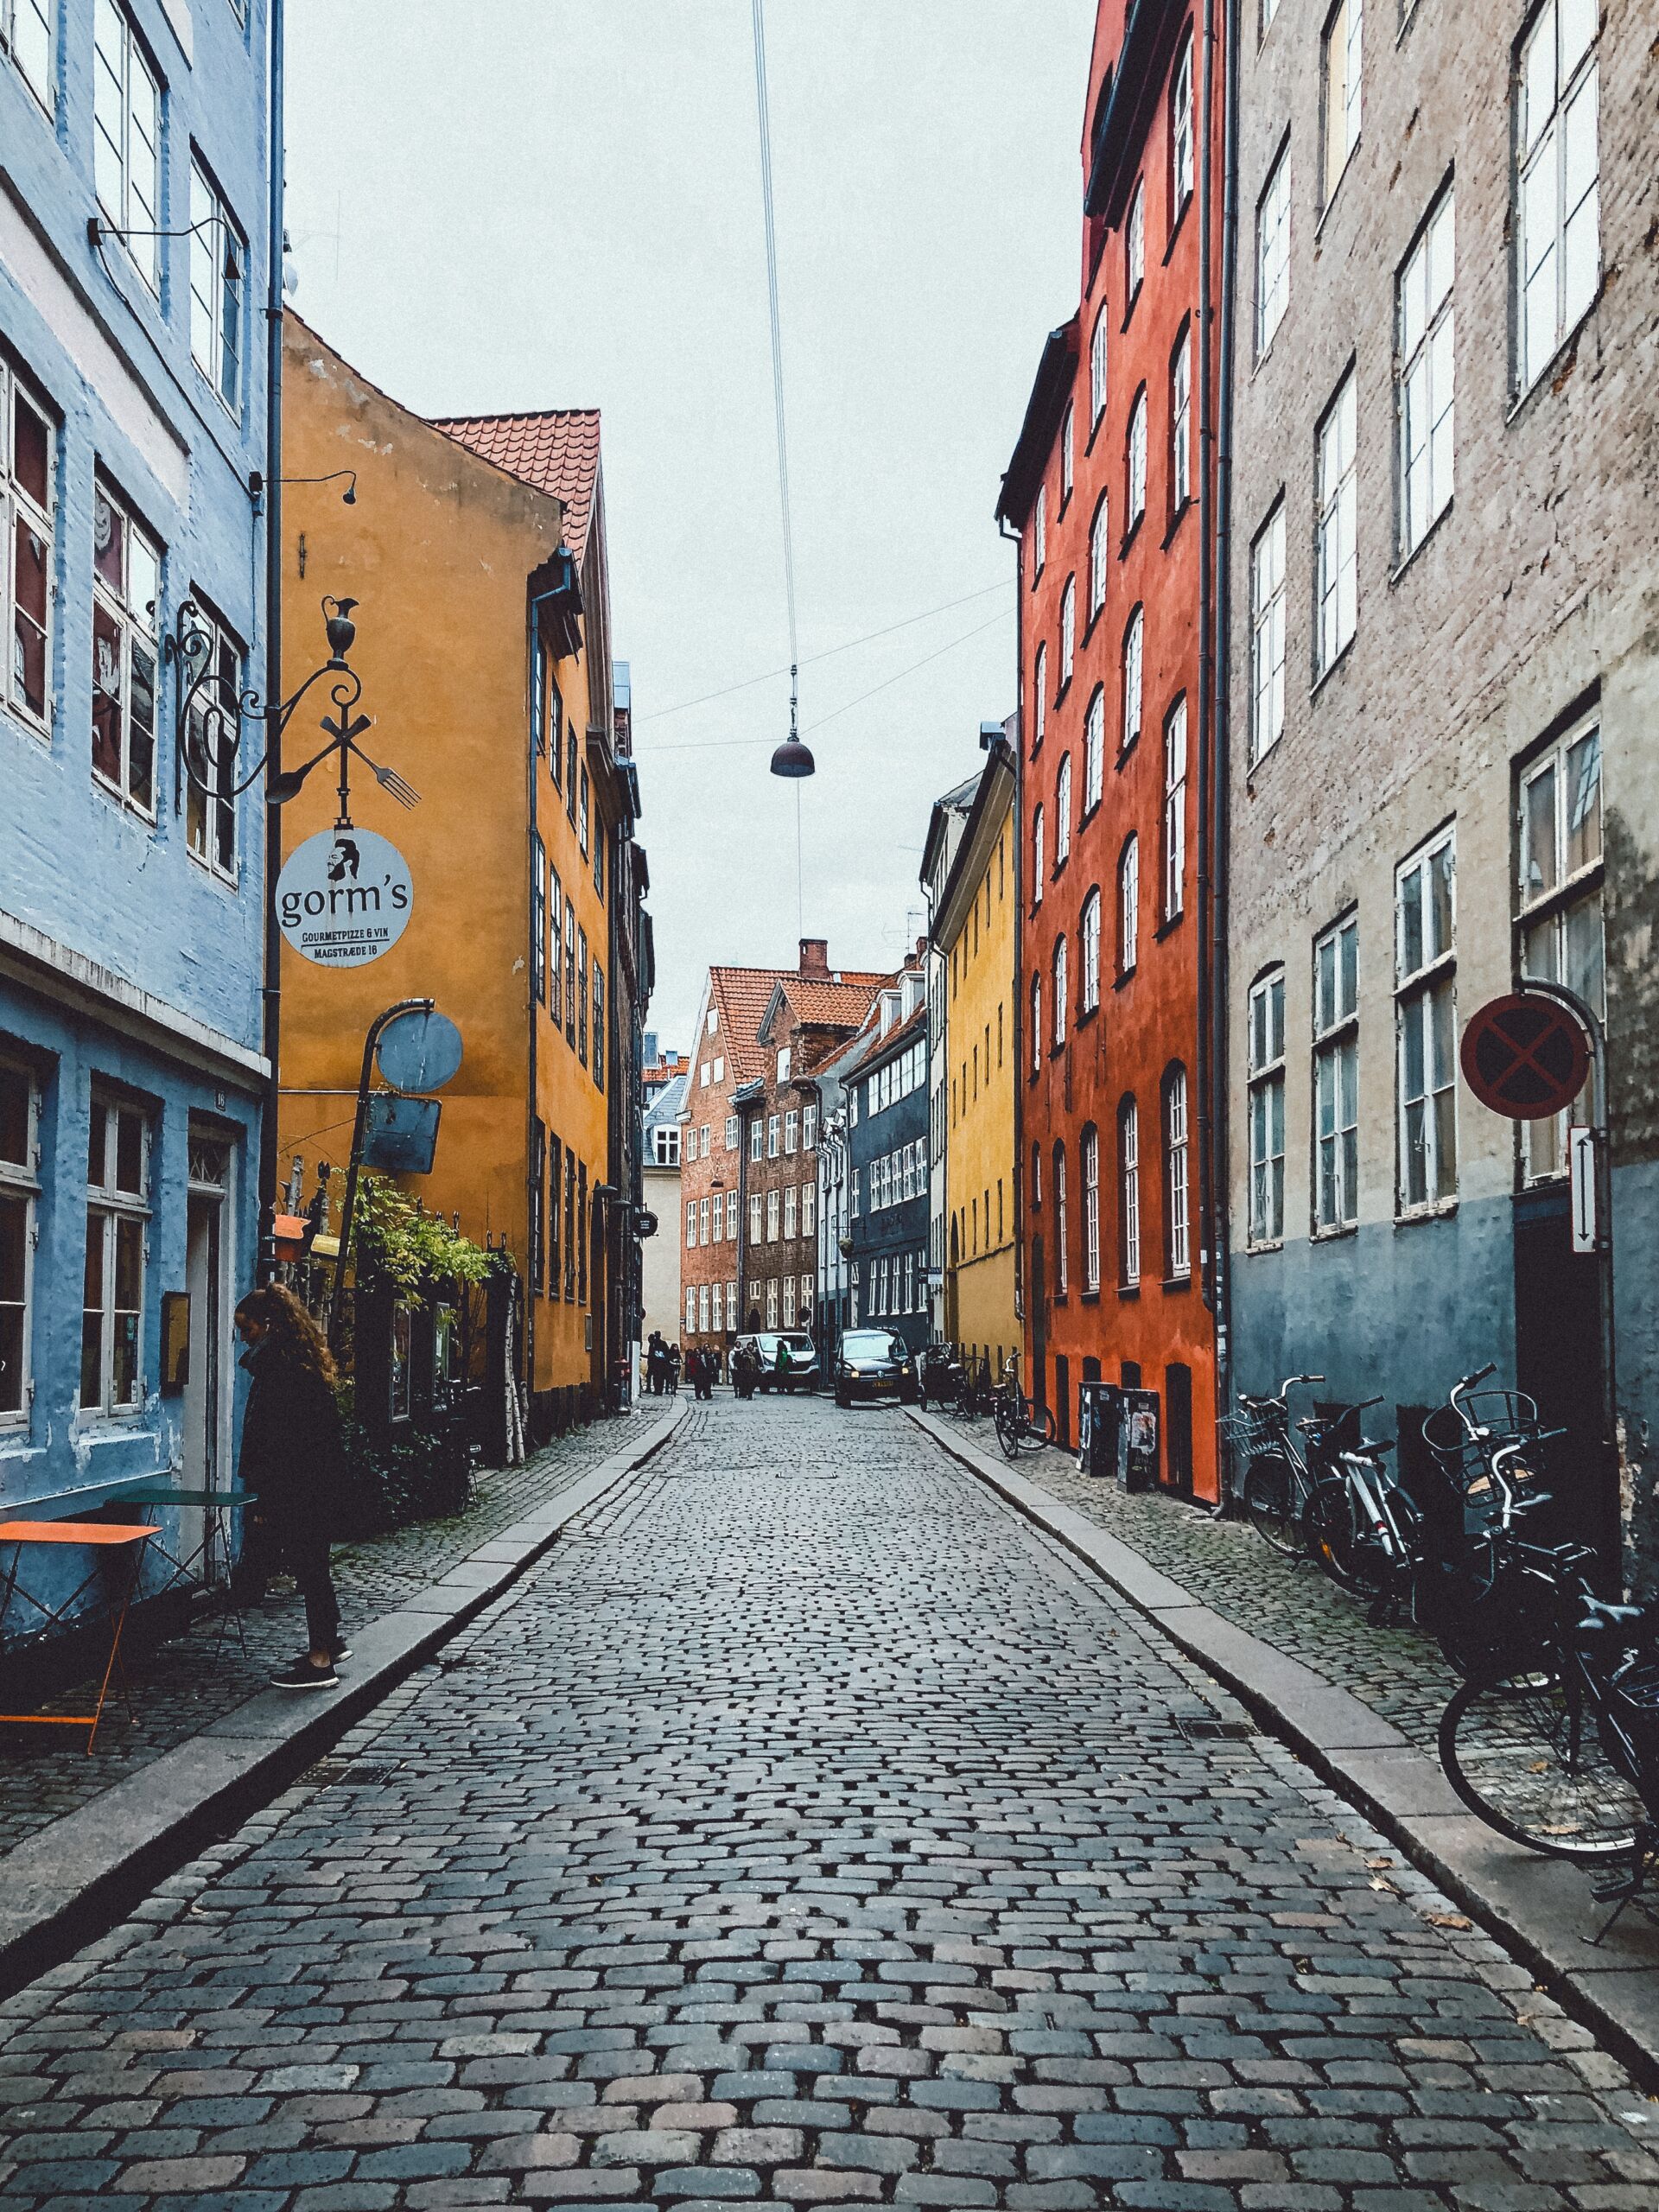 Is Copenhagen worth visiting?